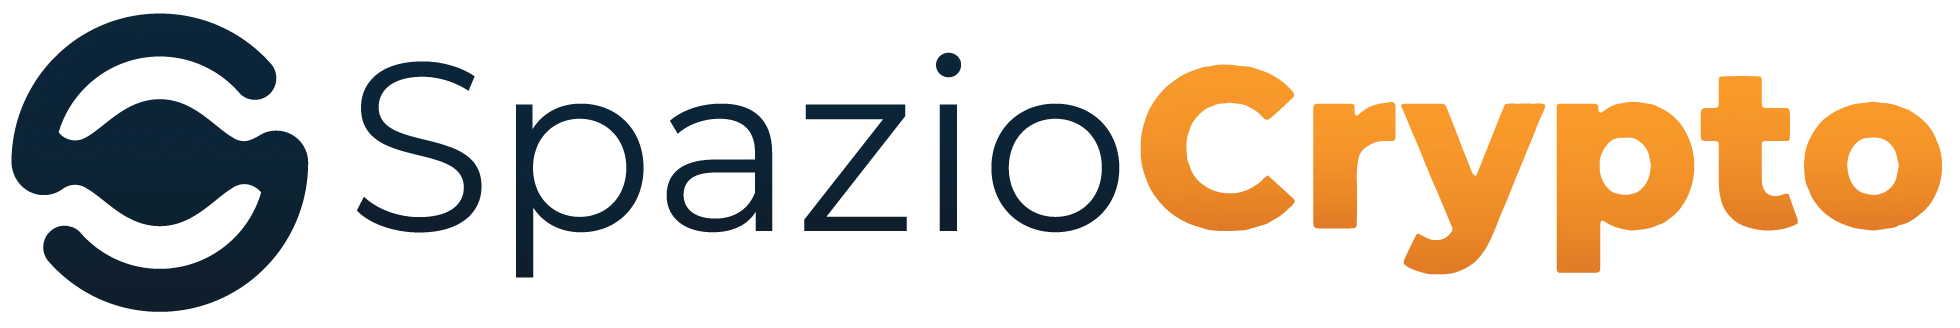 Spaziocrypto | Italian Web3 Community icon